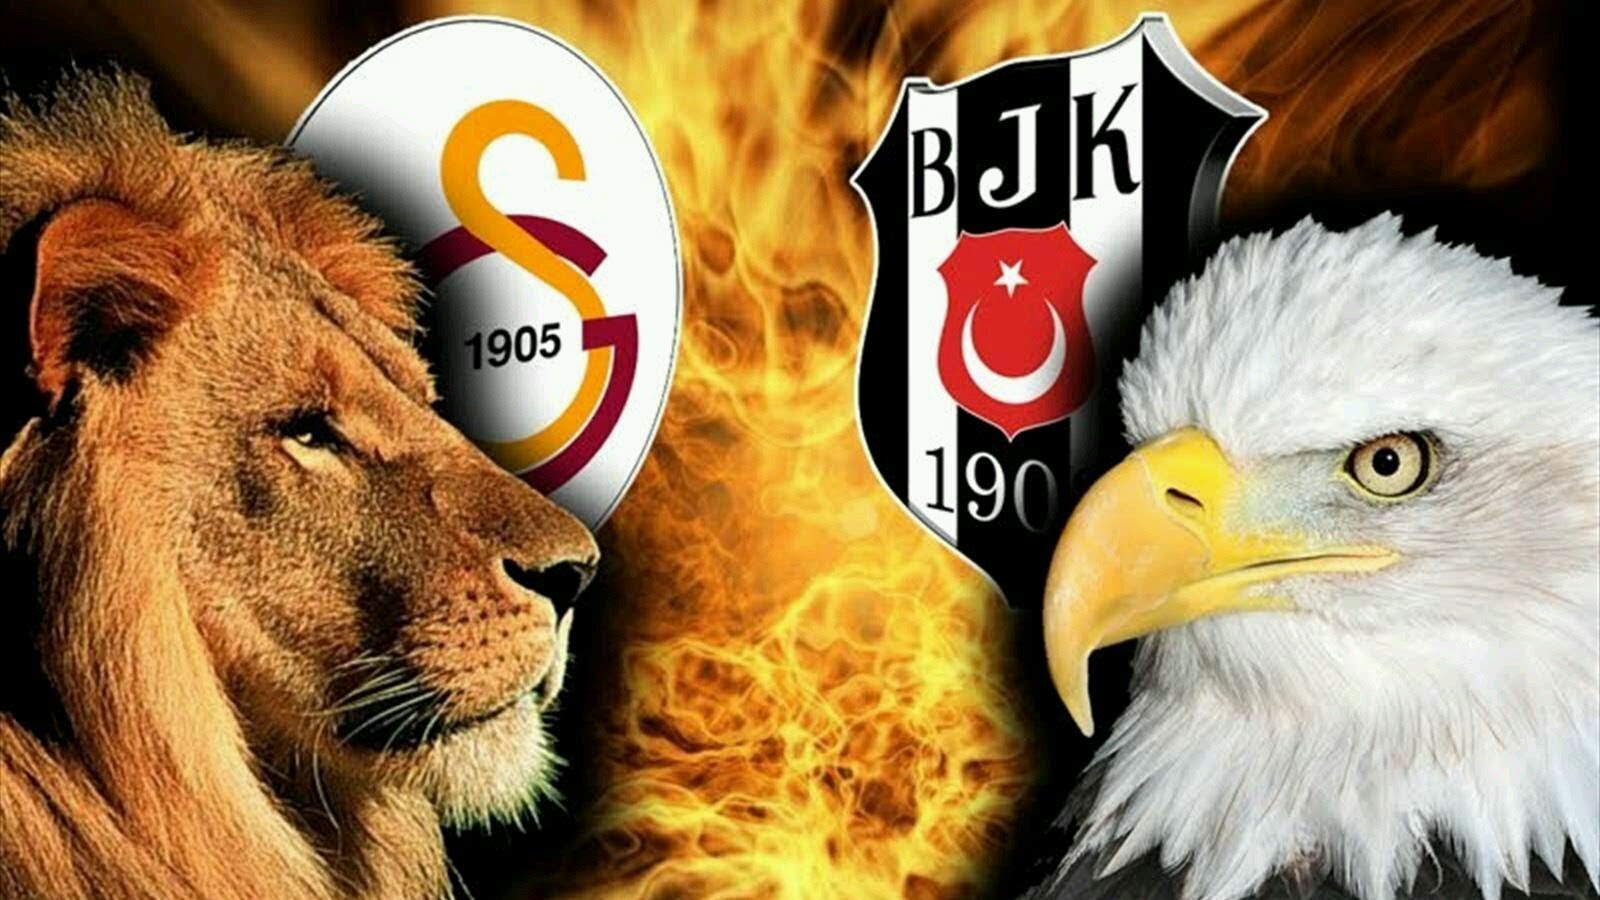 Galatasaray VS Besiktas BETTING TIPS (27-02-2017)